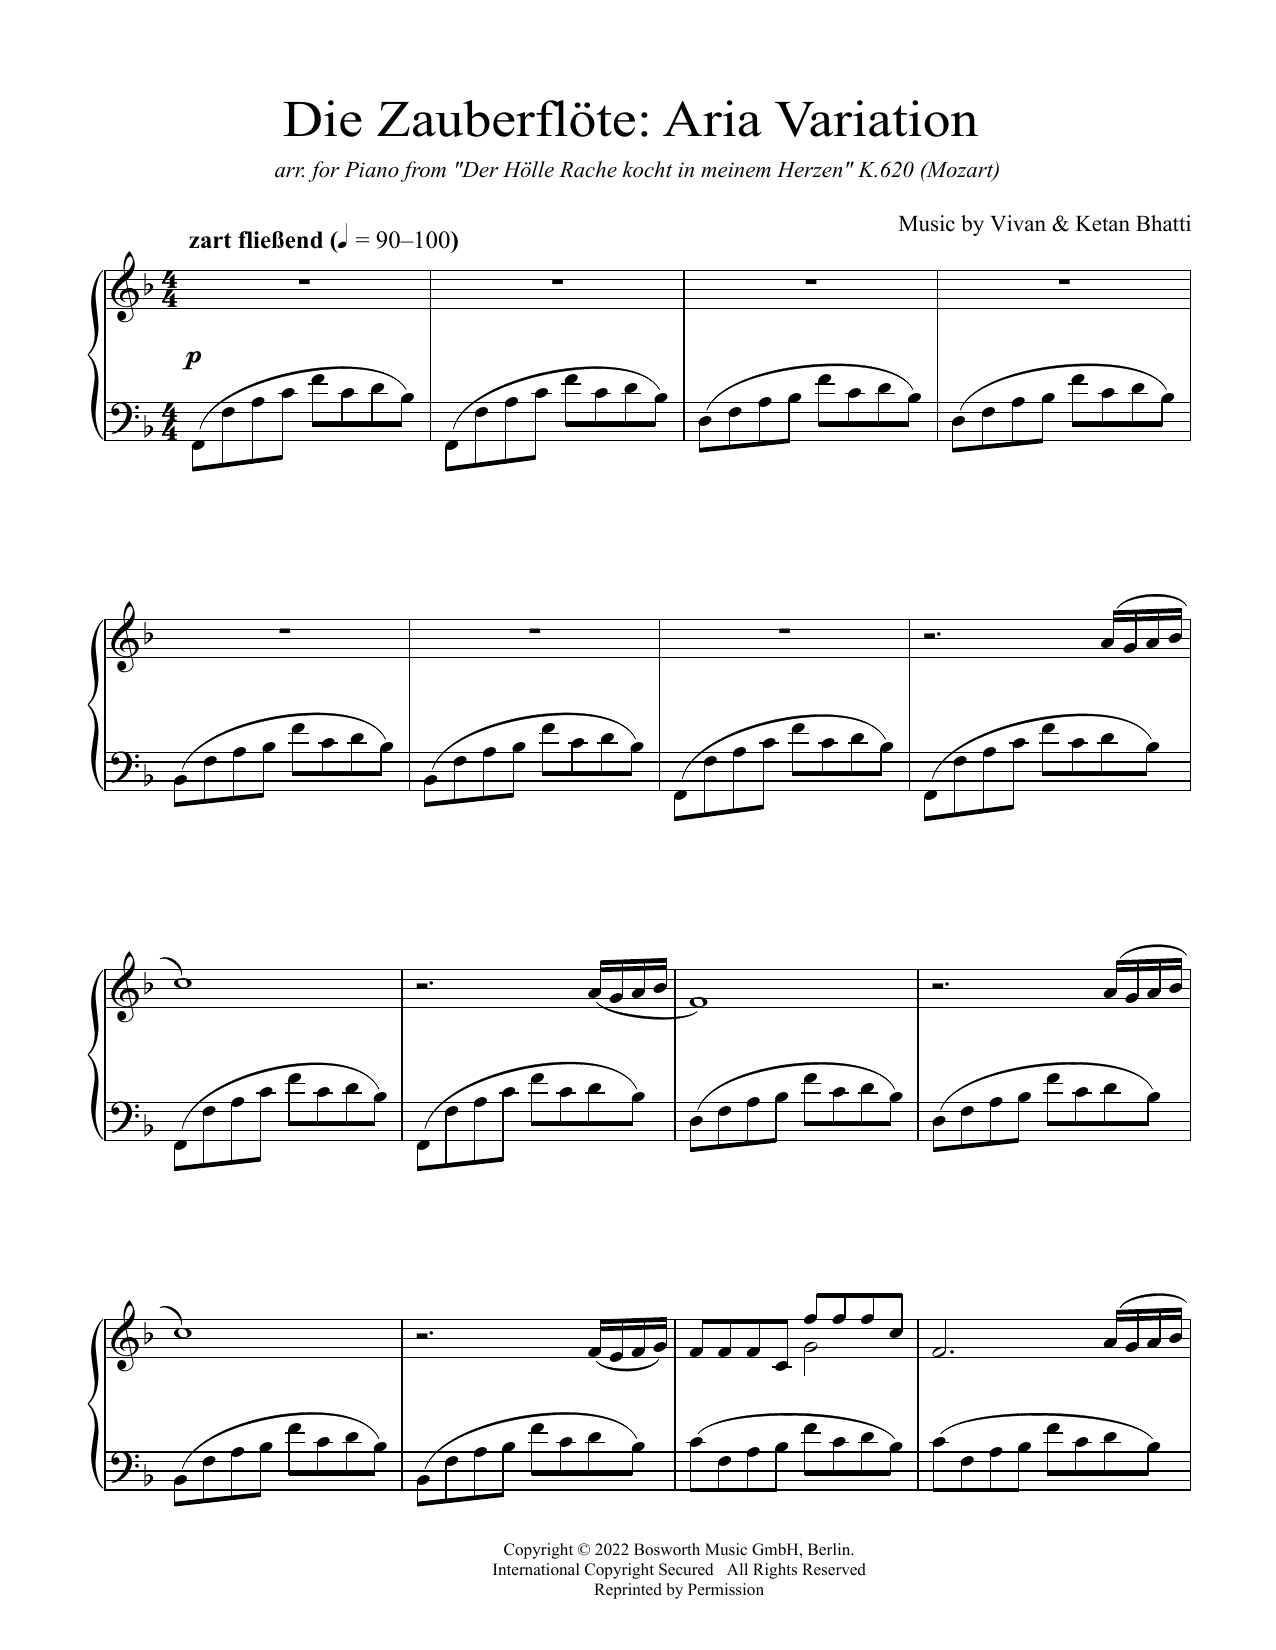 Download Vivan & Ketan Bhatti Die Zauberflöte: Aria Variation Sheet Music and learn how to play Piano Solo PDF digital score in minutes